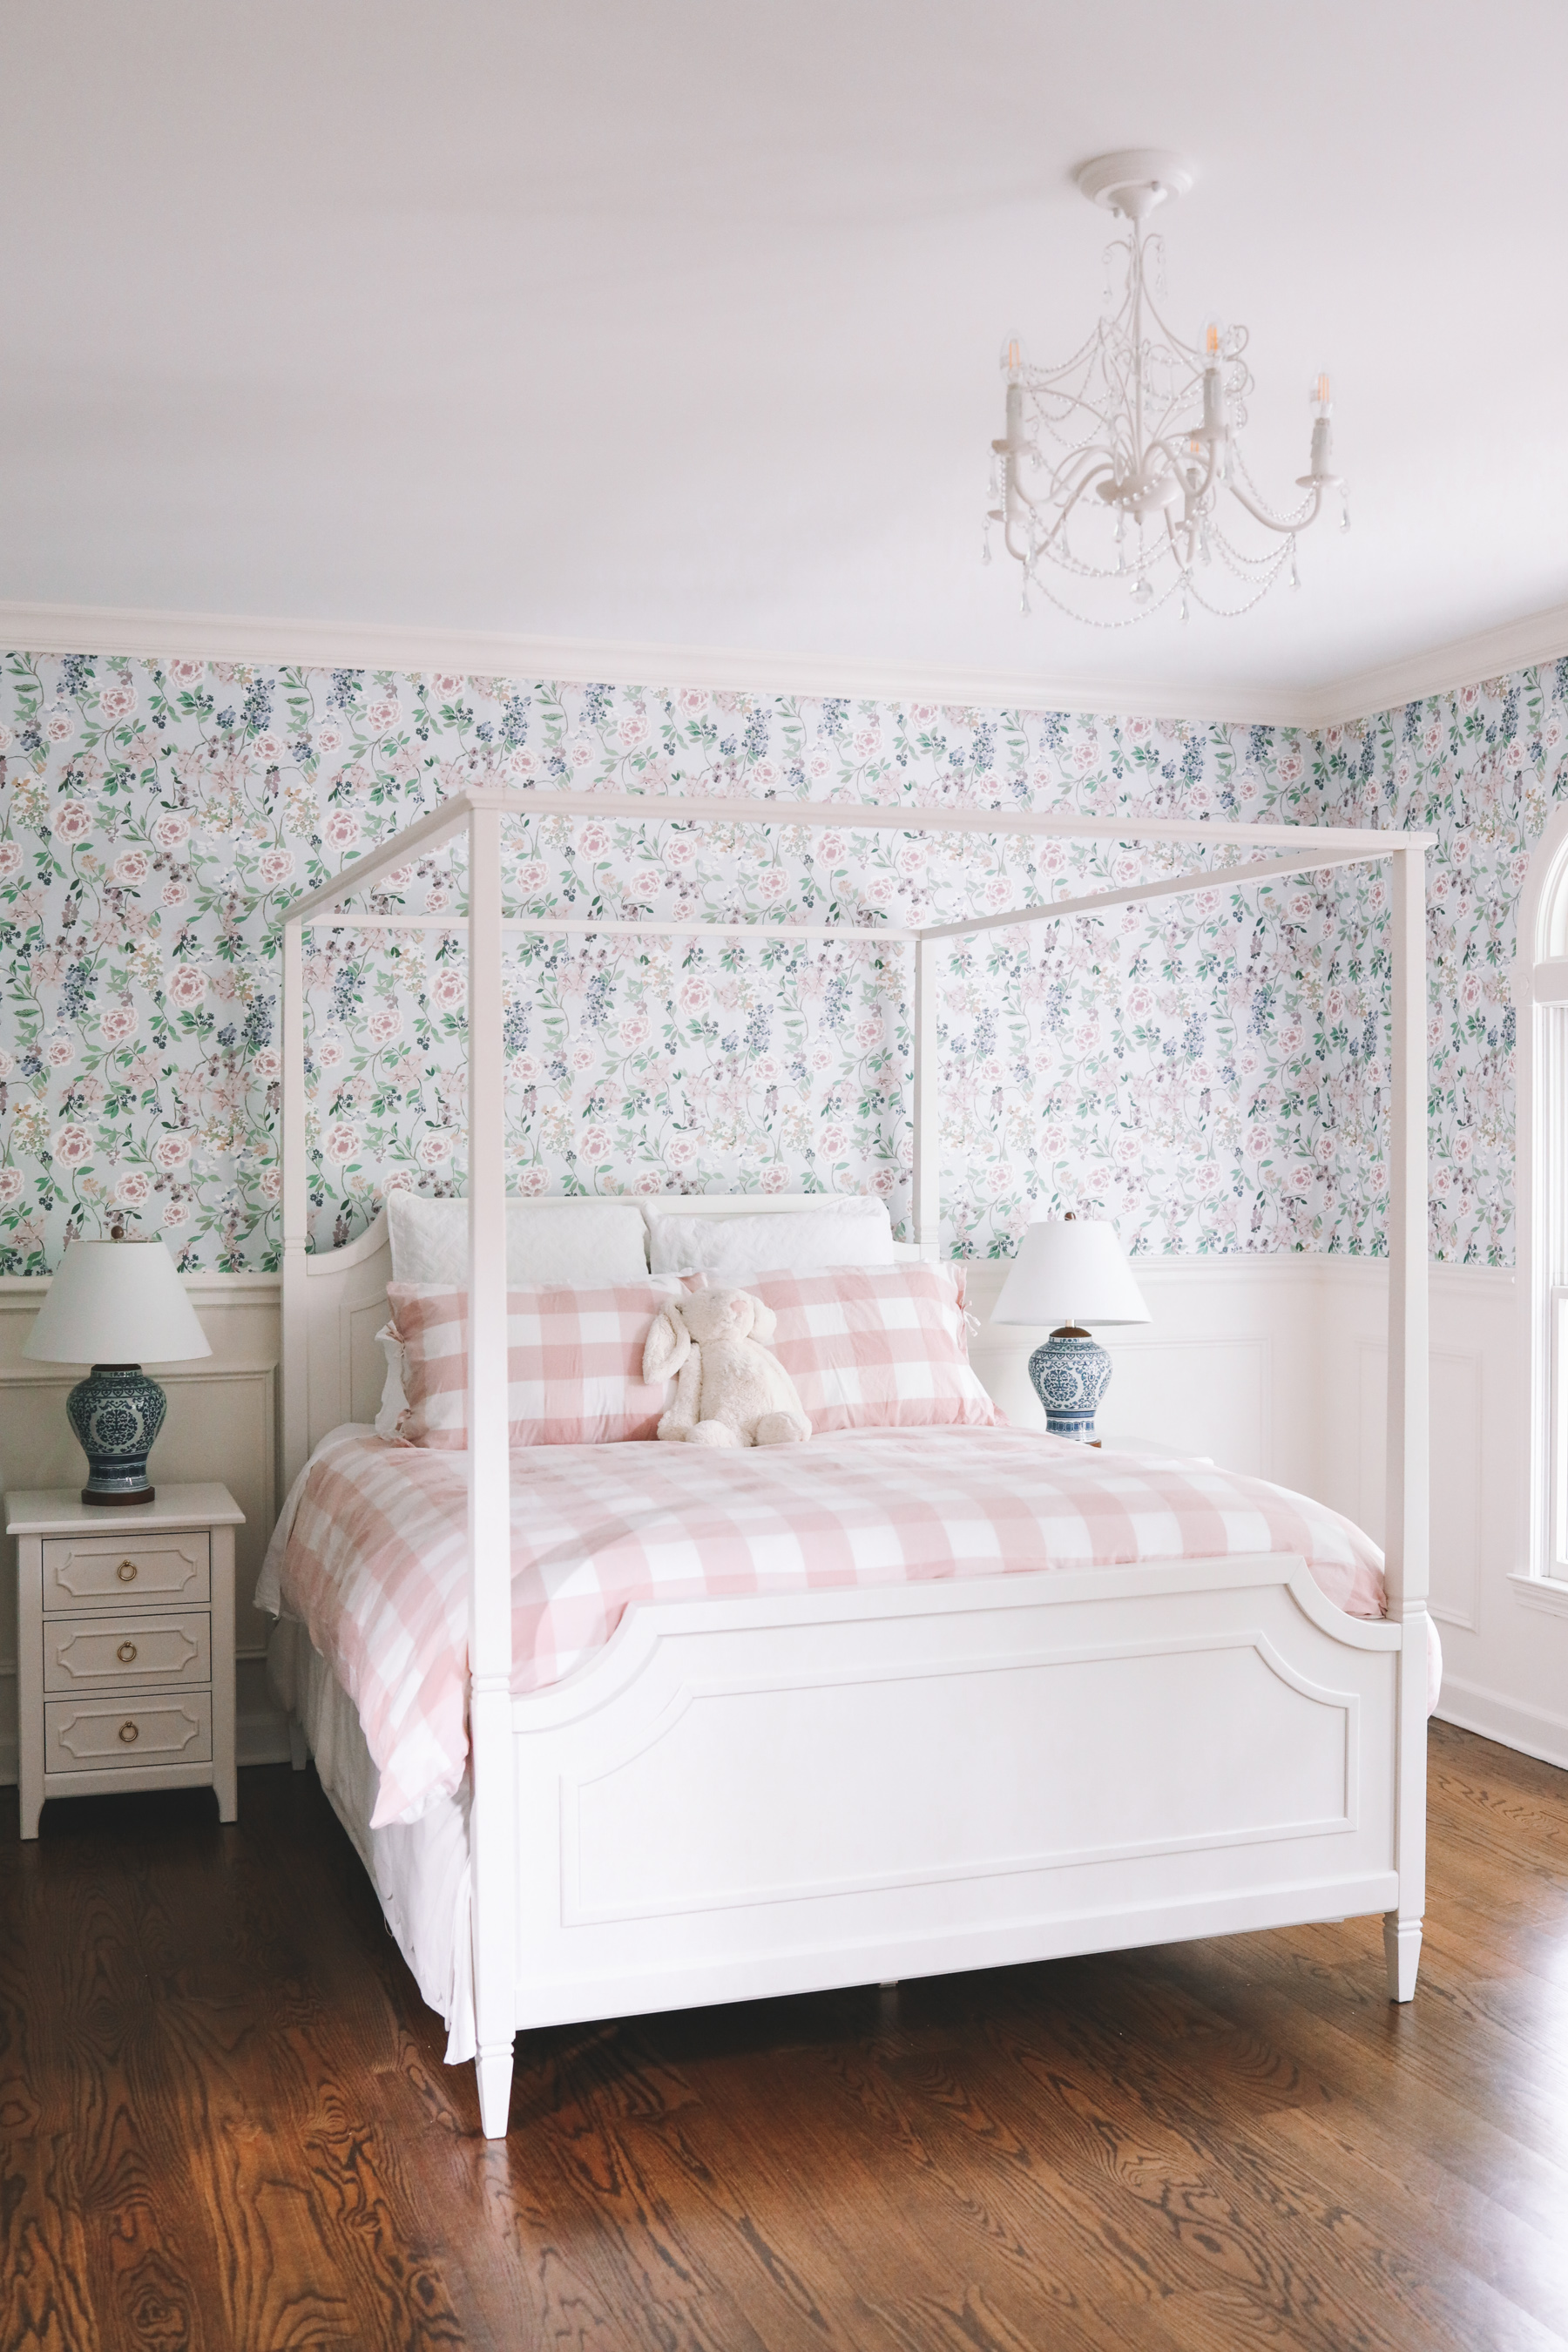 Emma's Room Gets Wallpapered